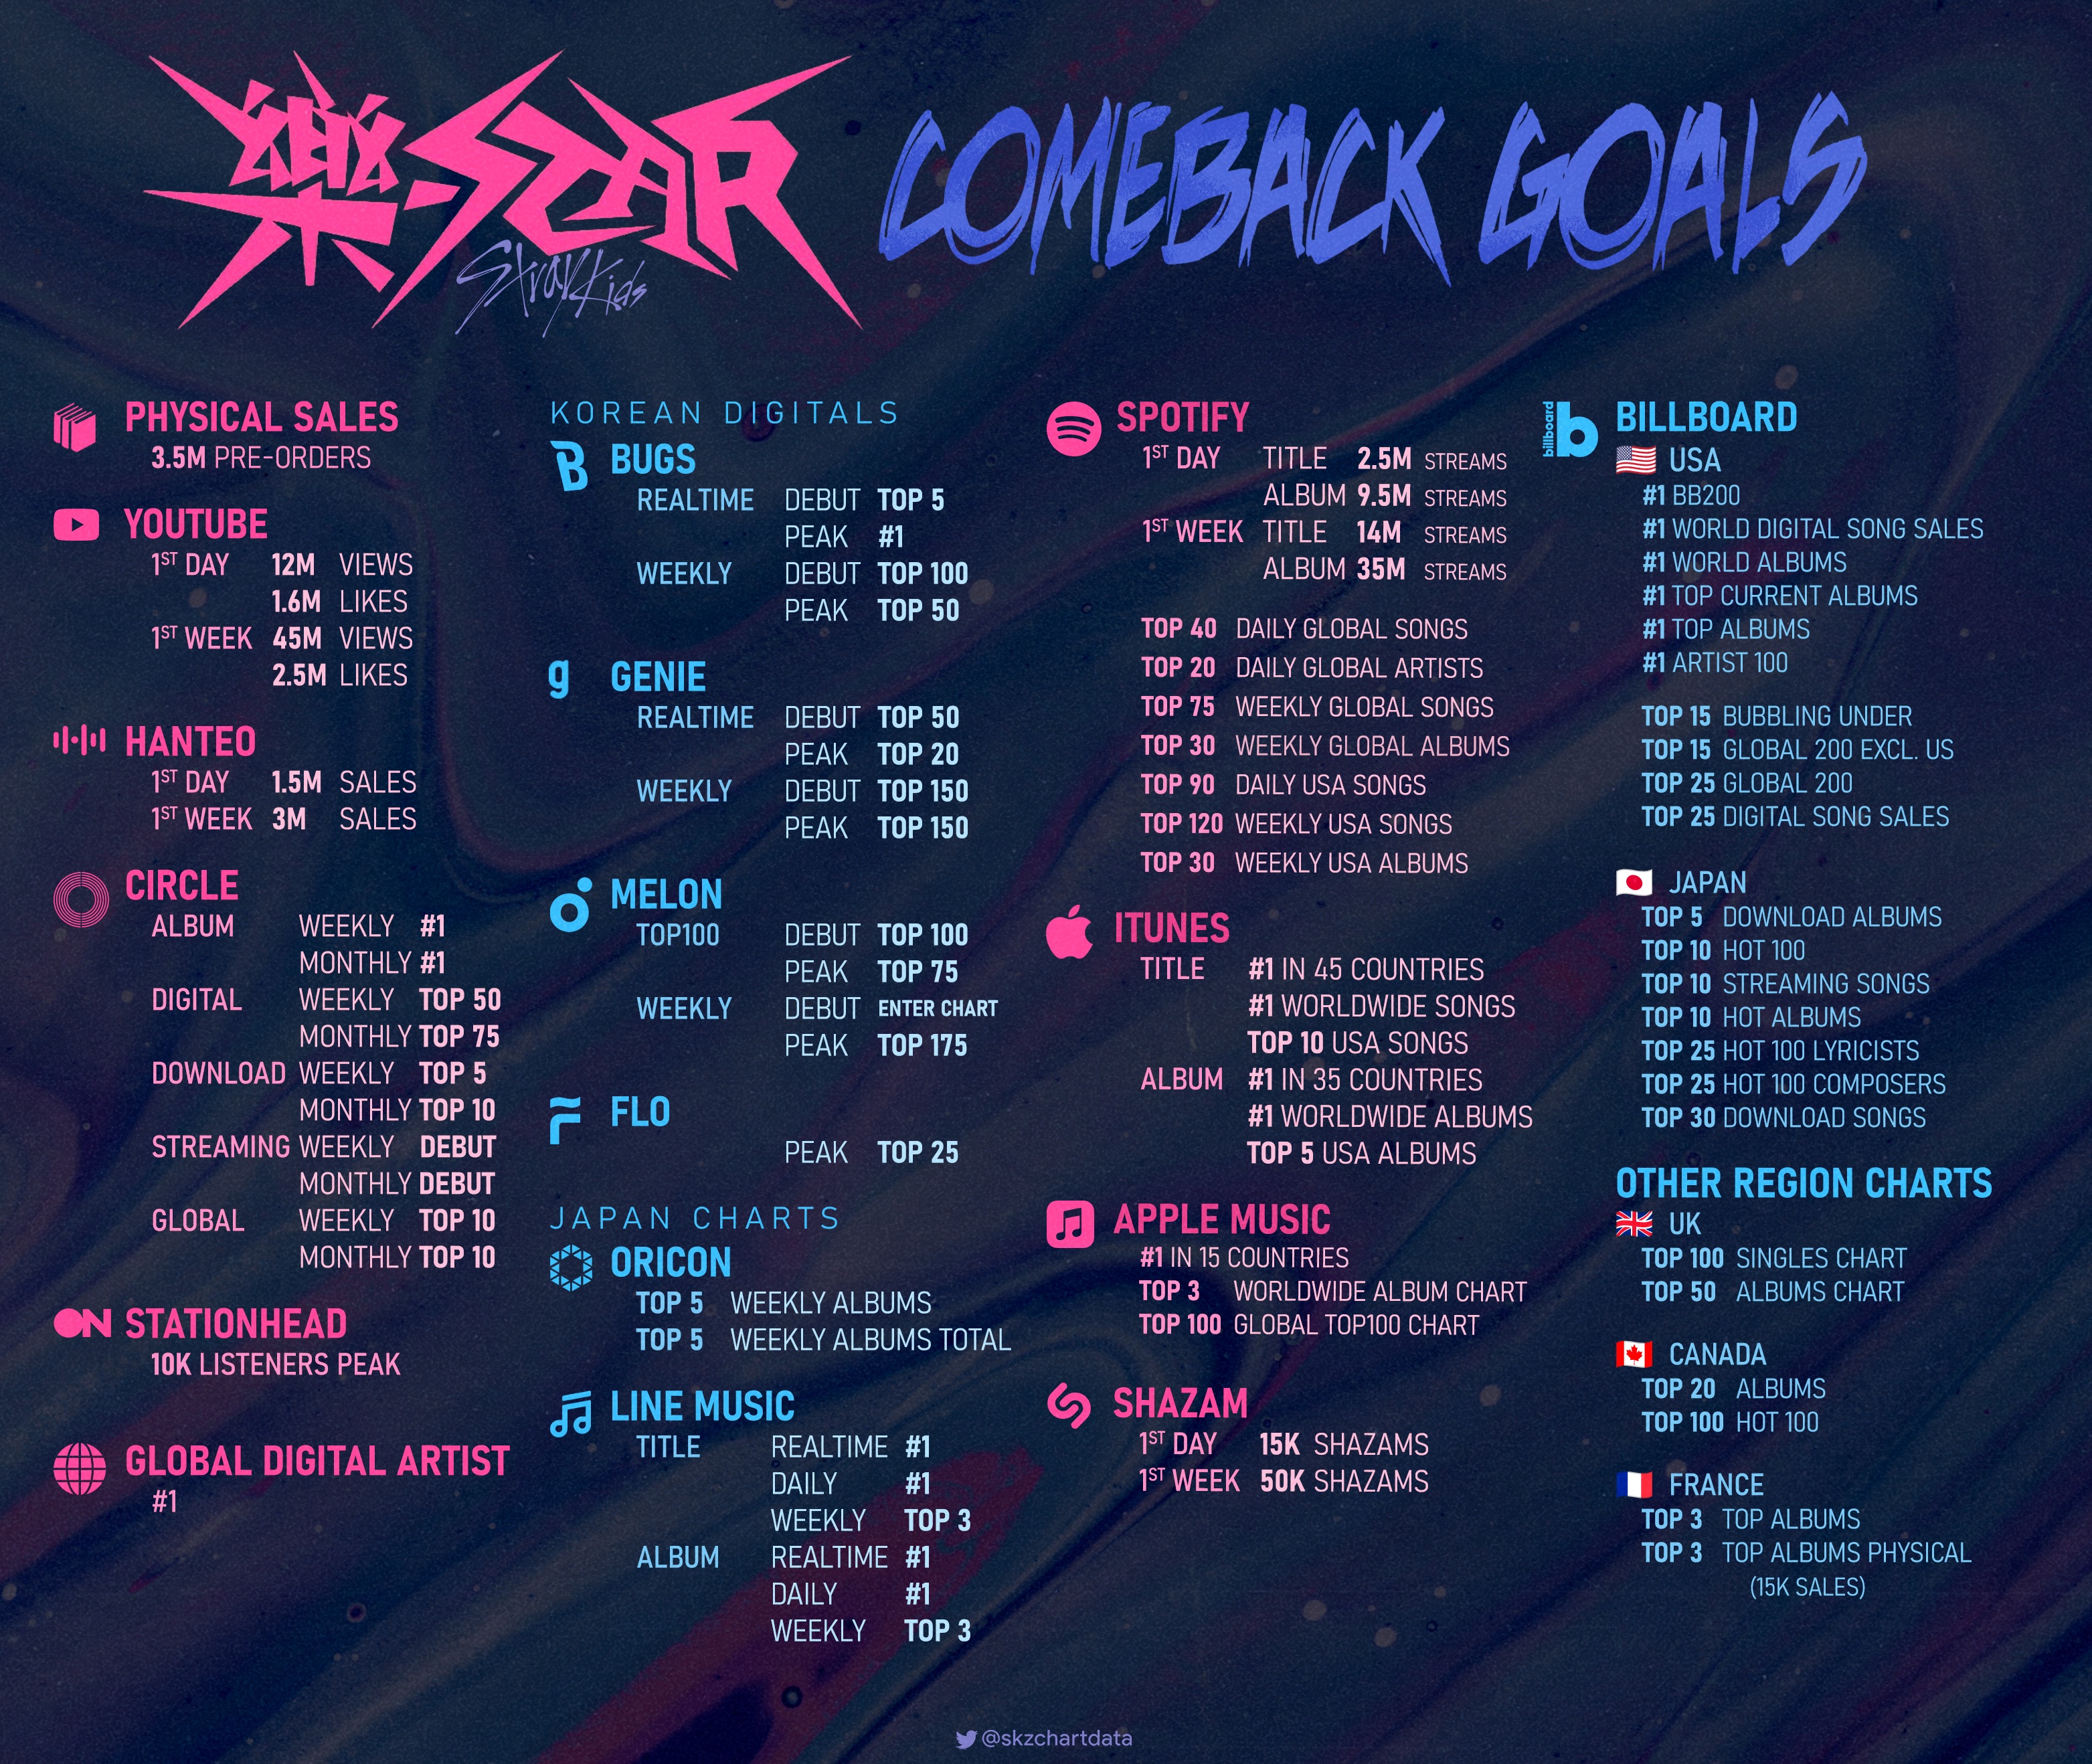 Stray Kids to Release New Comeback Album, “ROCK STAR” - Kpoppost